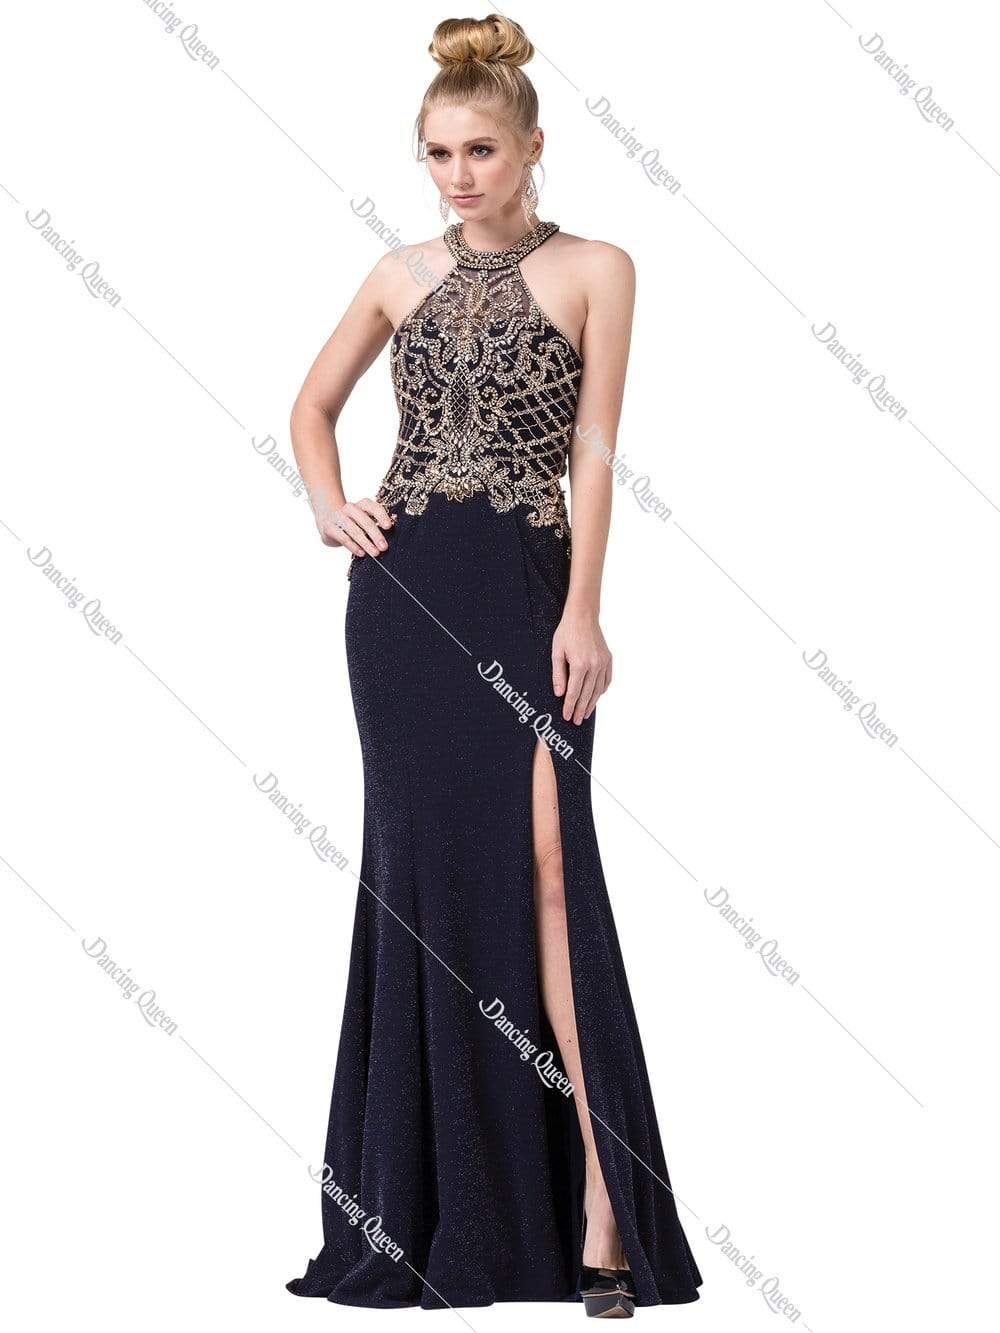 Dancing Queen - 2583 Beaded Multi-Cutout High Slit Gown
